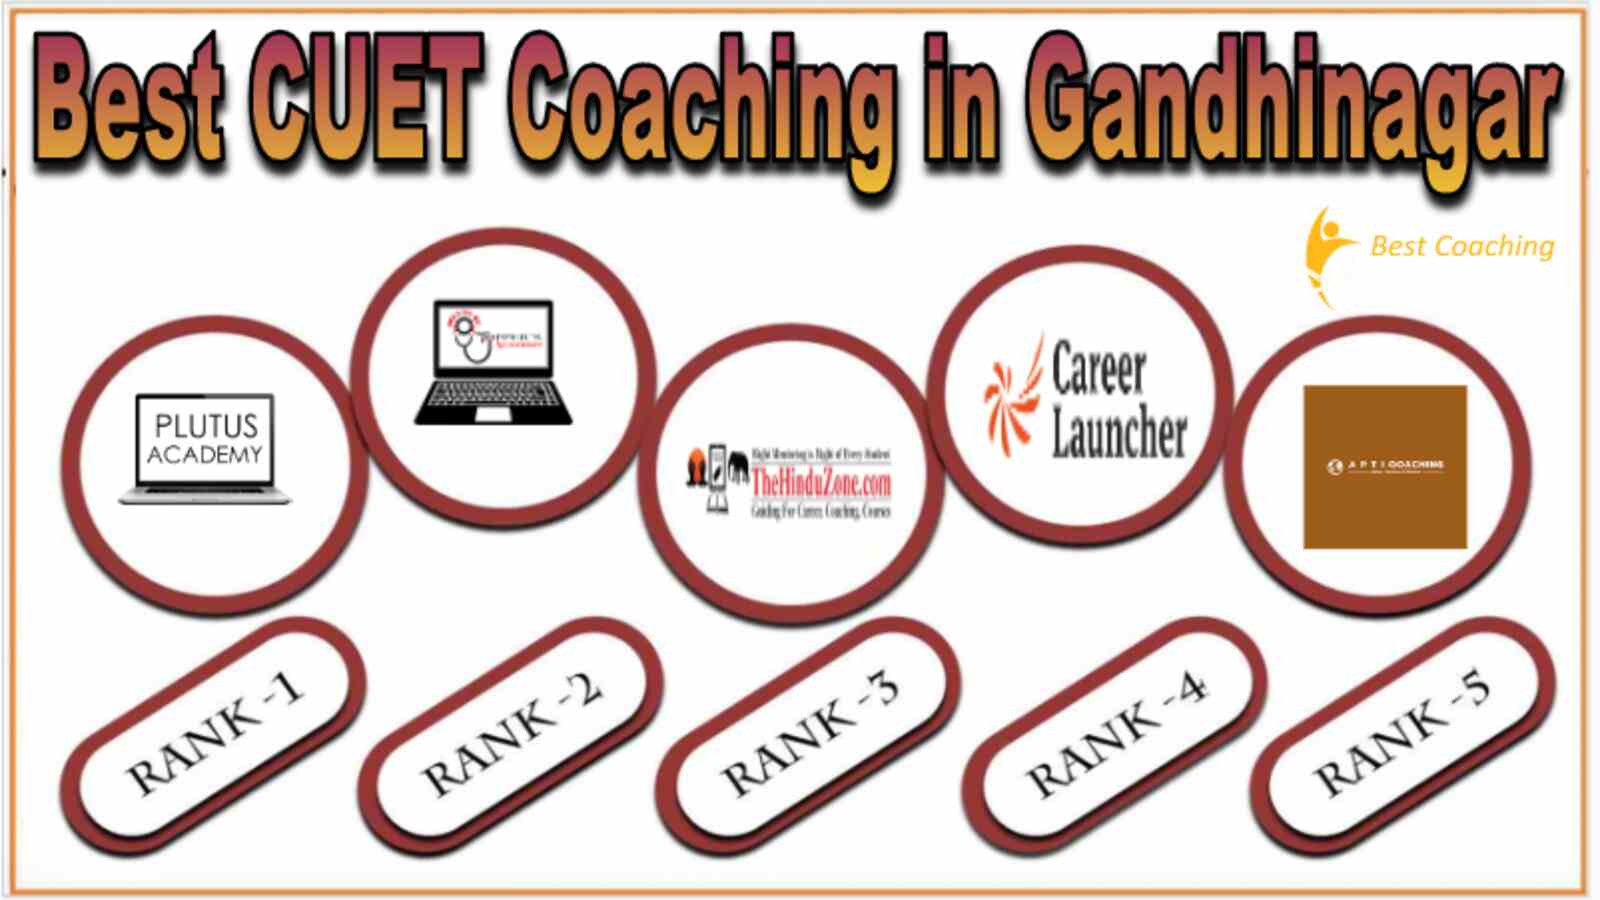 Best CUET Coaching in Gandhinagar